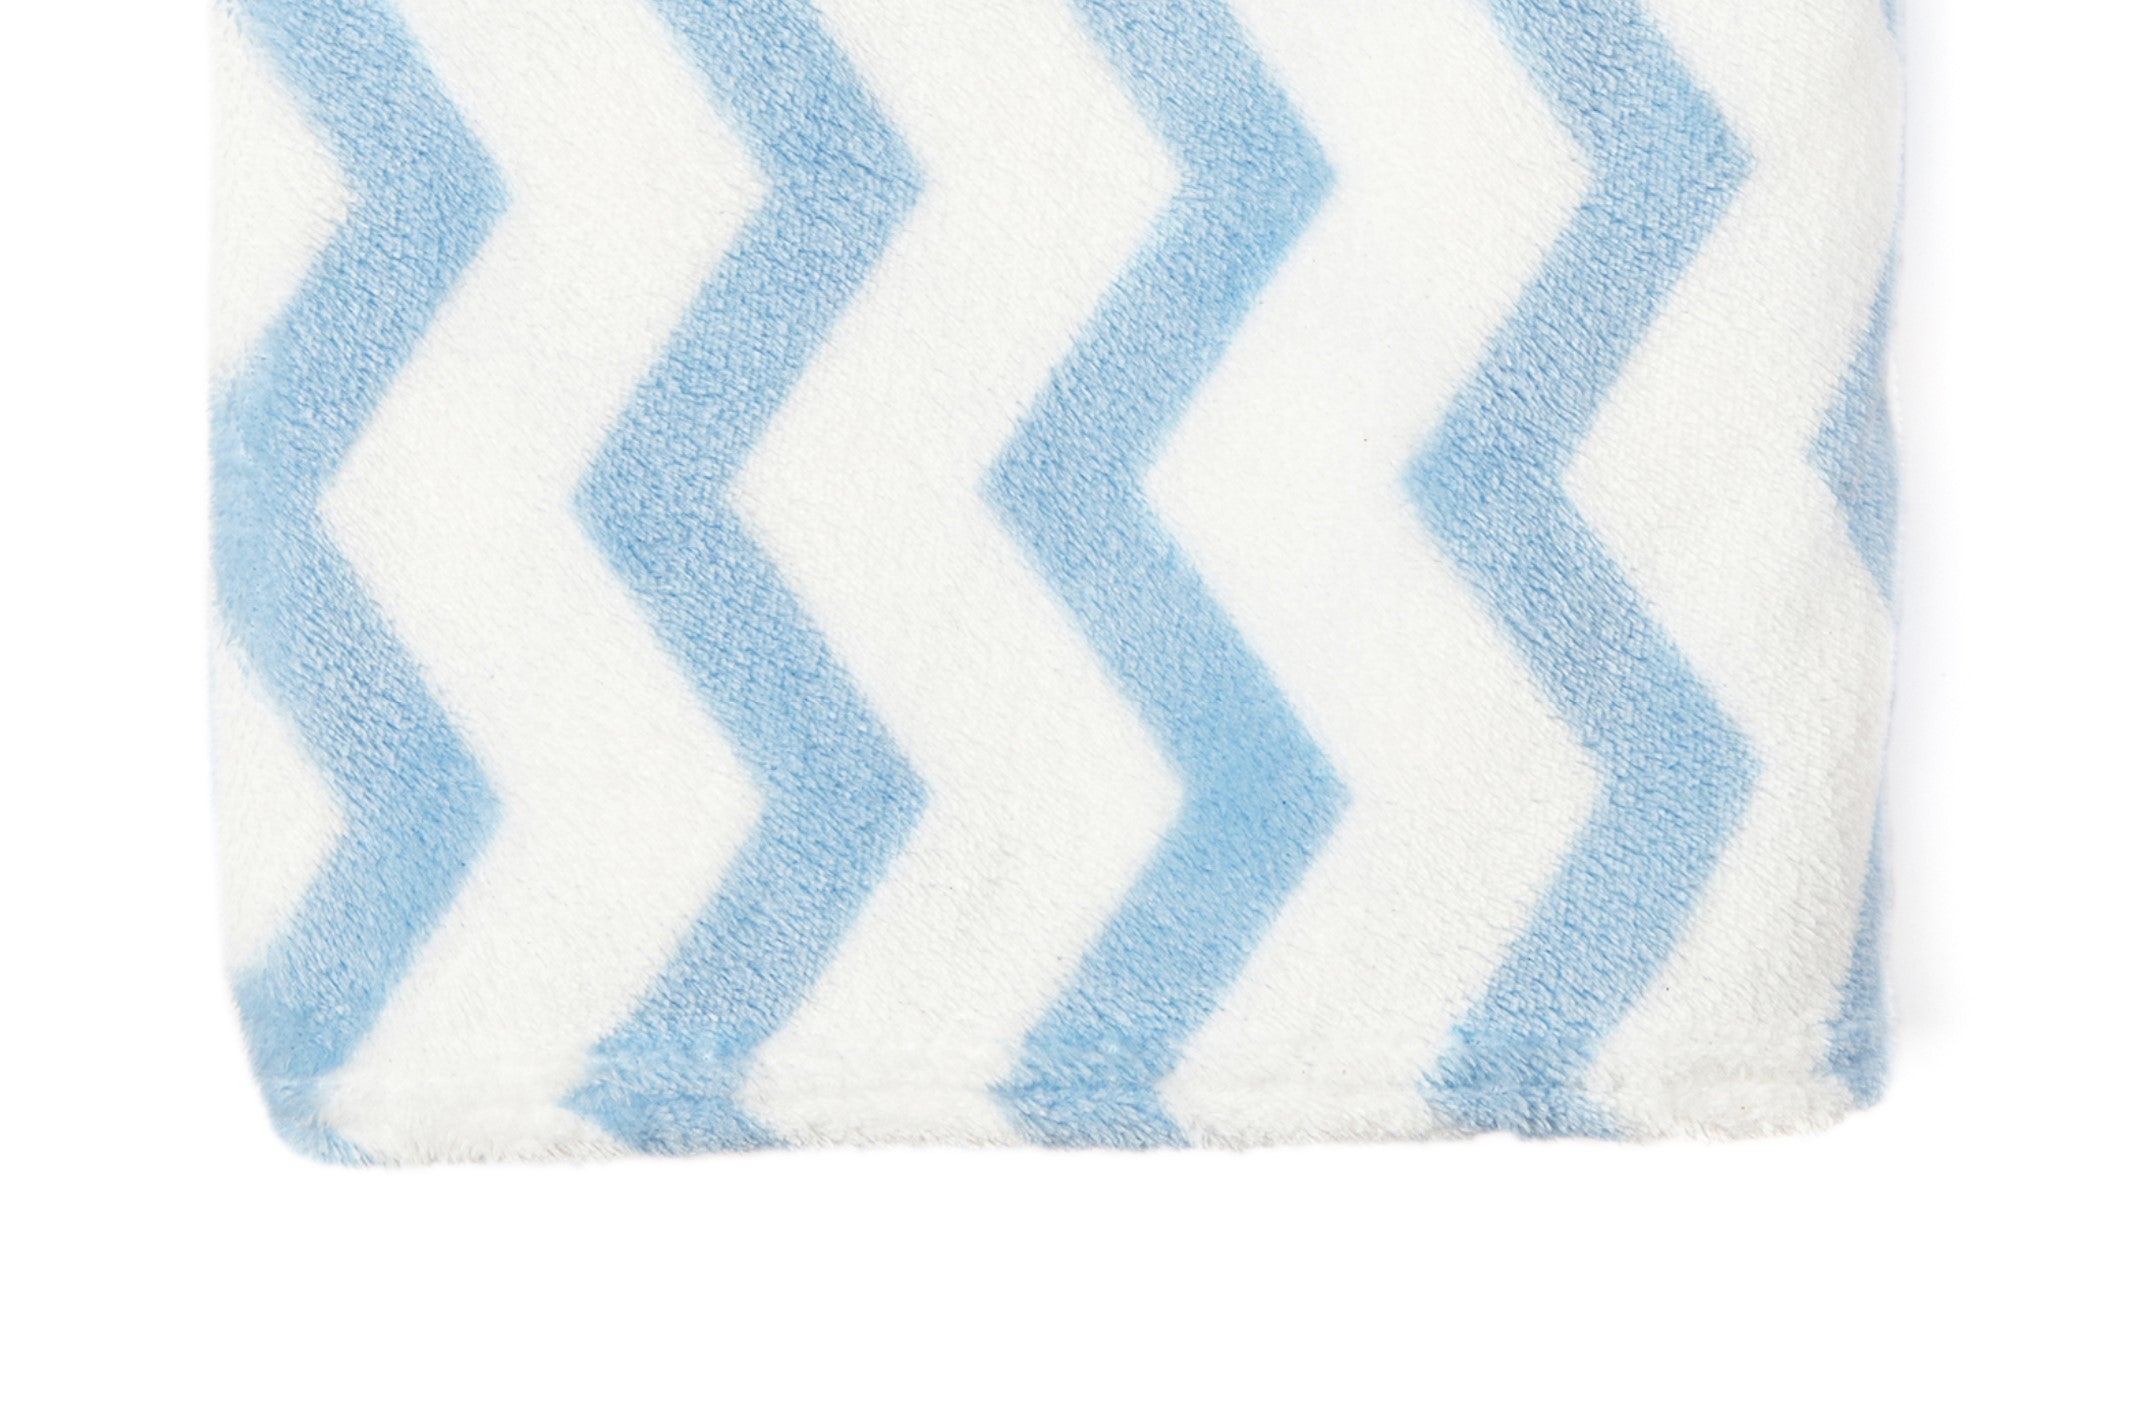 Zig Zag Fleece Baby Blanket, 30 x 40 in, White & Blue Color